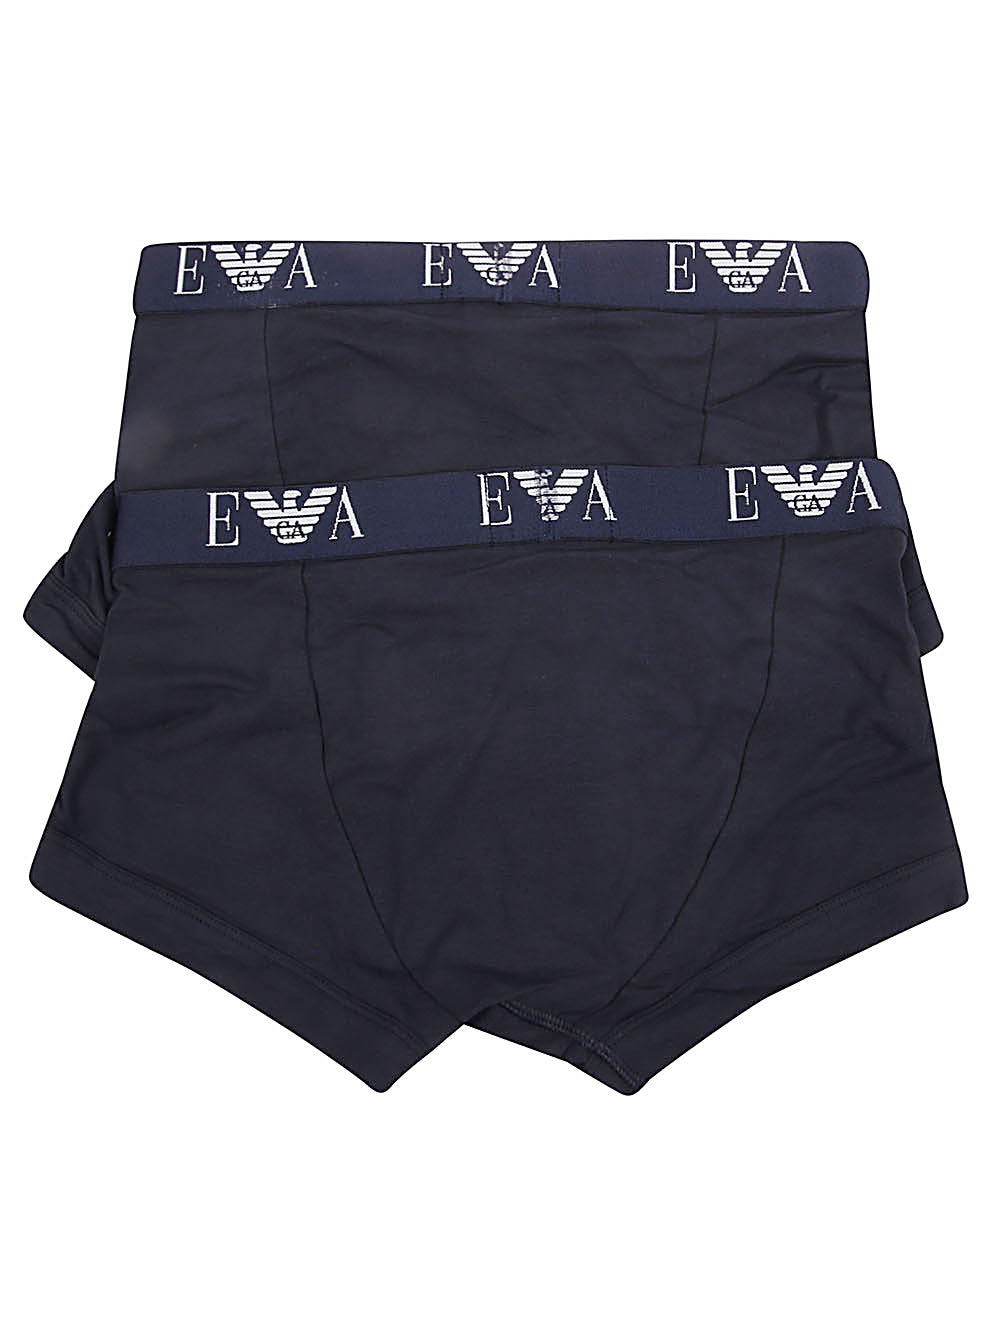 Emporio Armani Underwear Blue